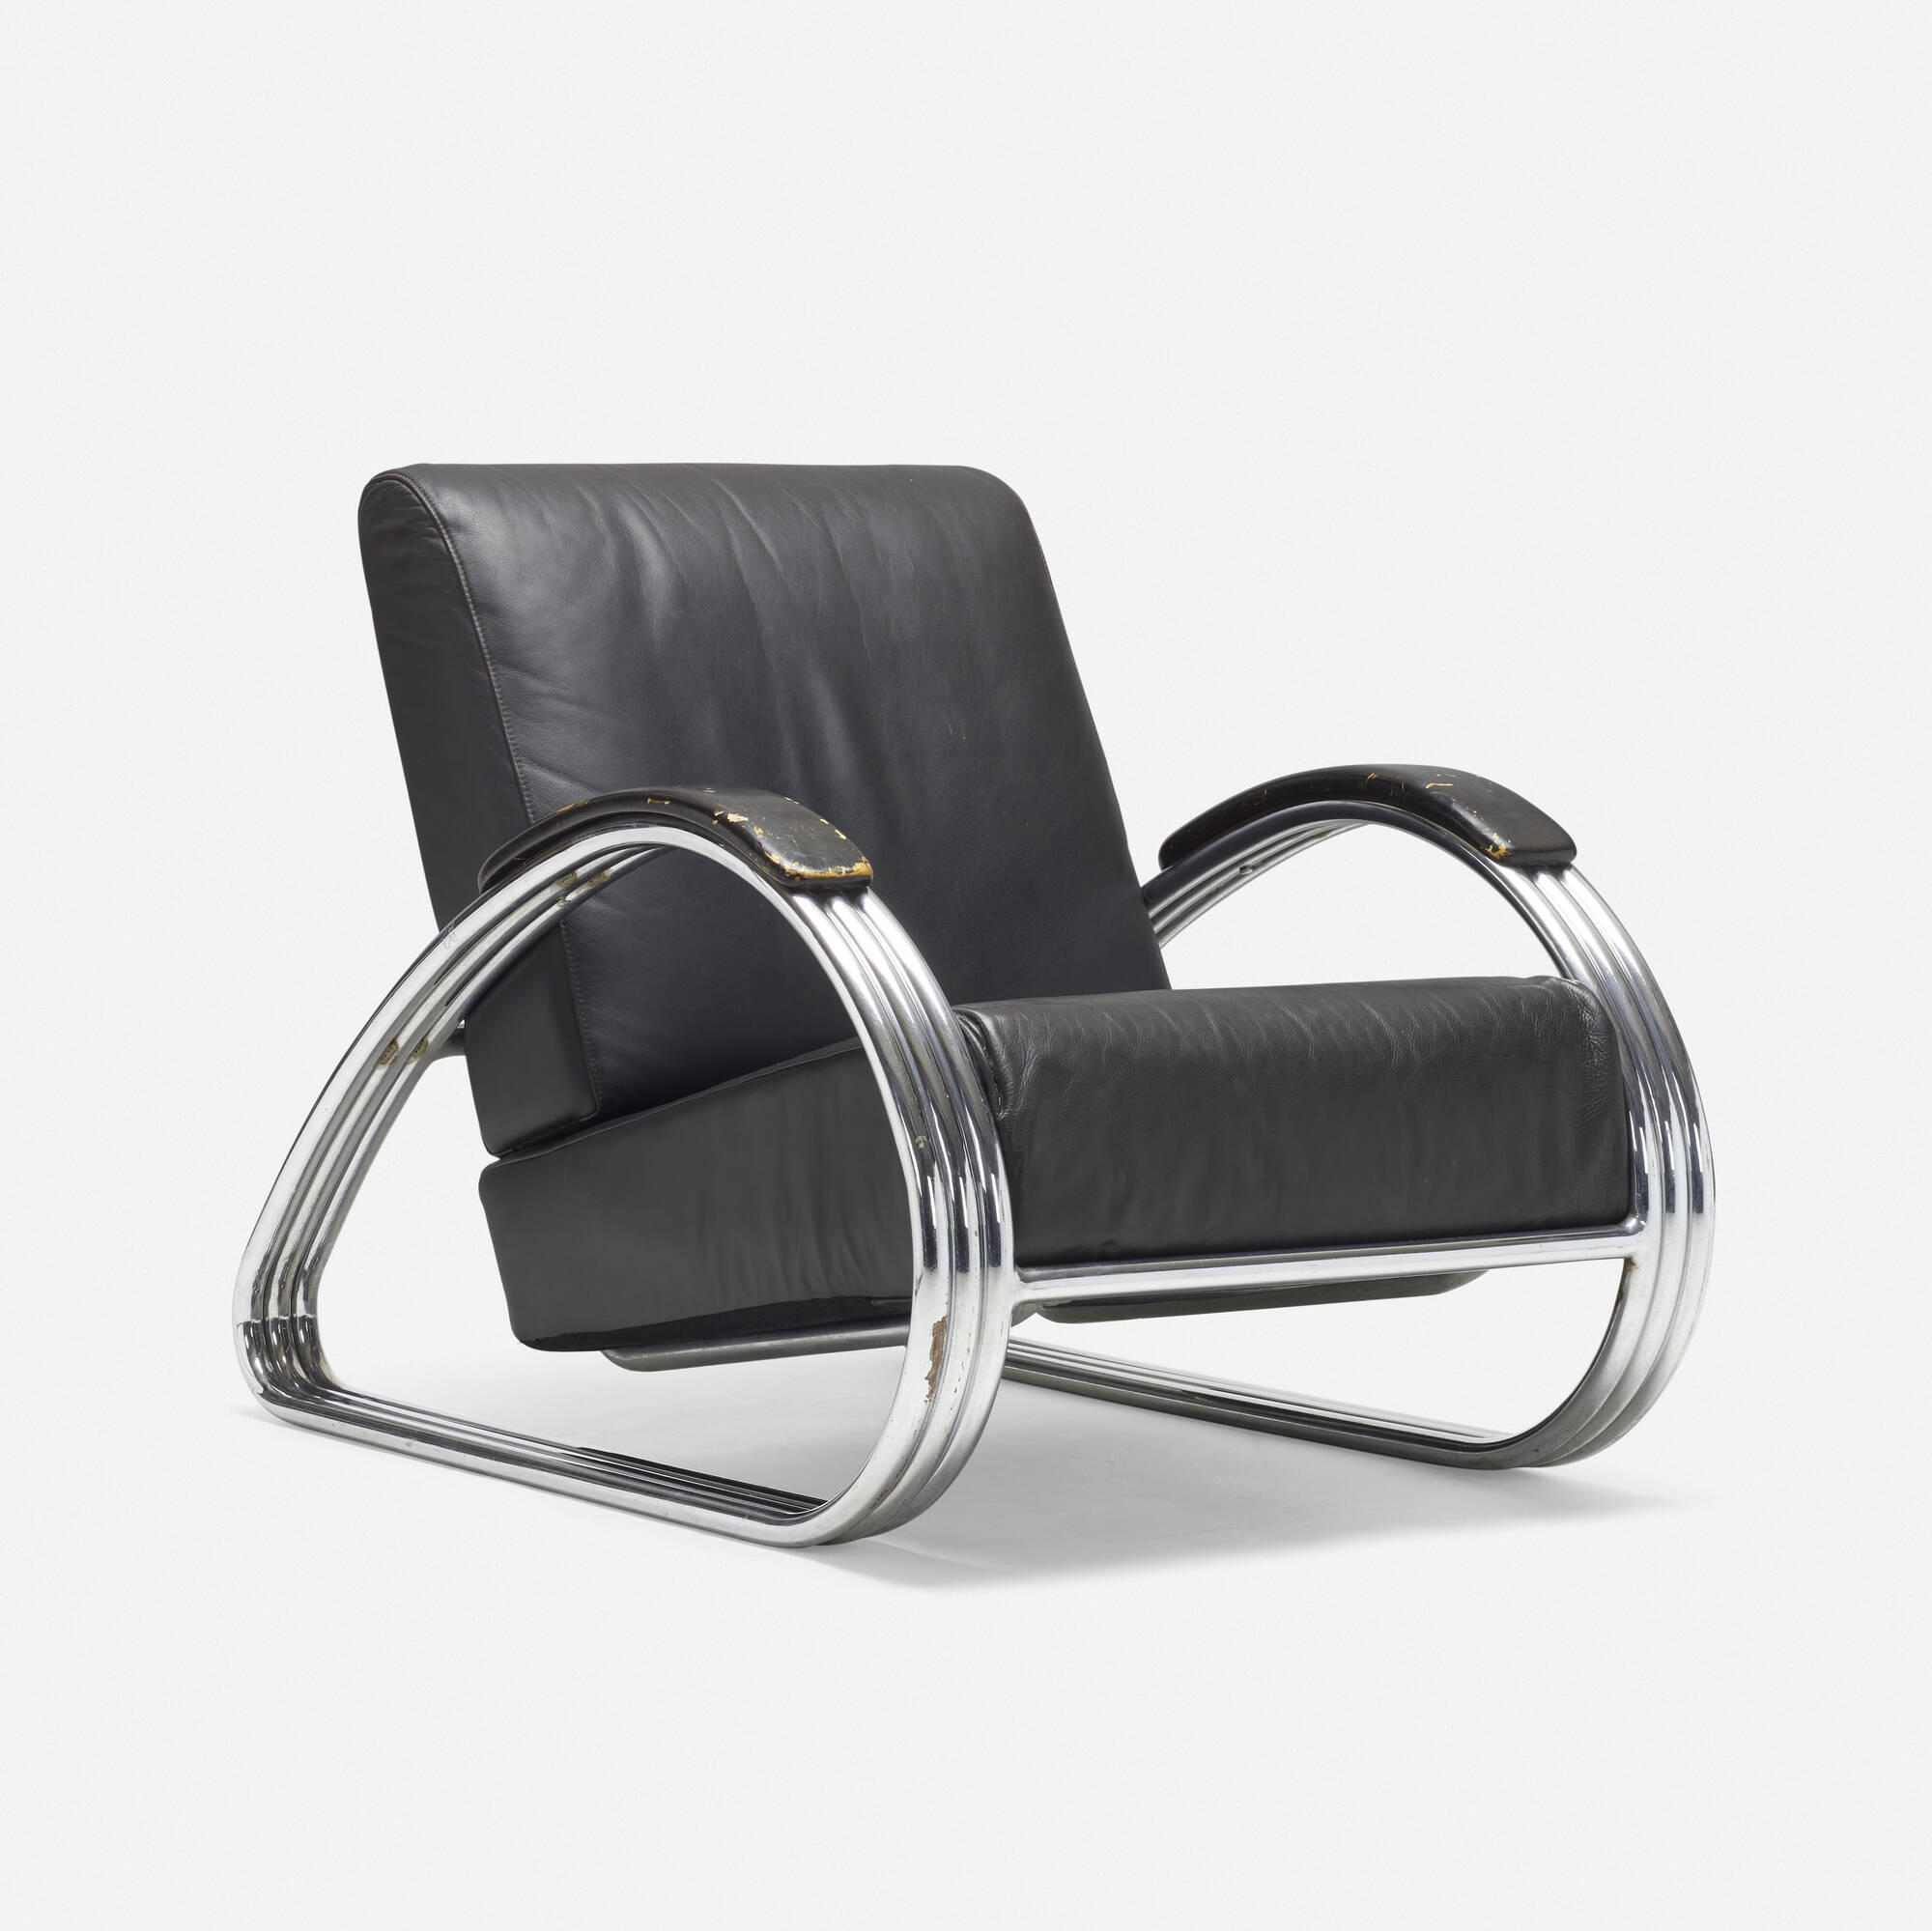 290: KEM WEBER, C-19-C lounge chair < American Design, 8 February 